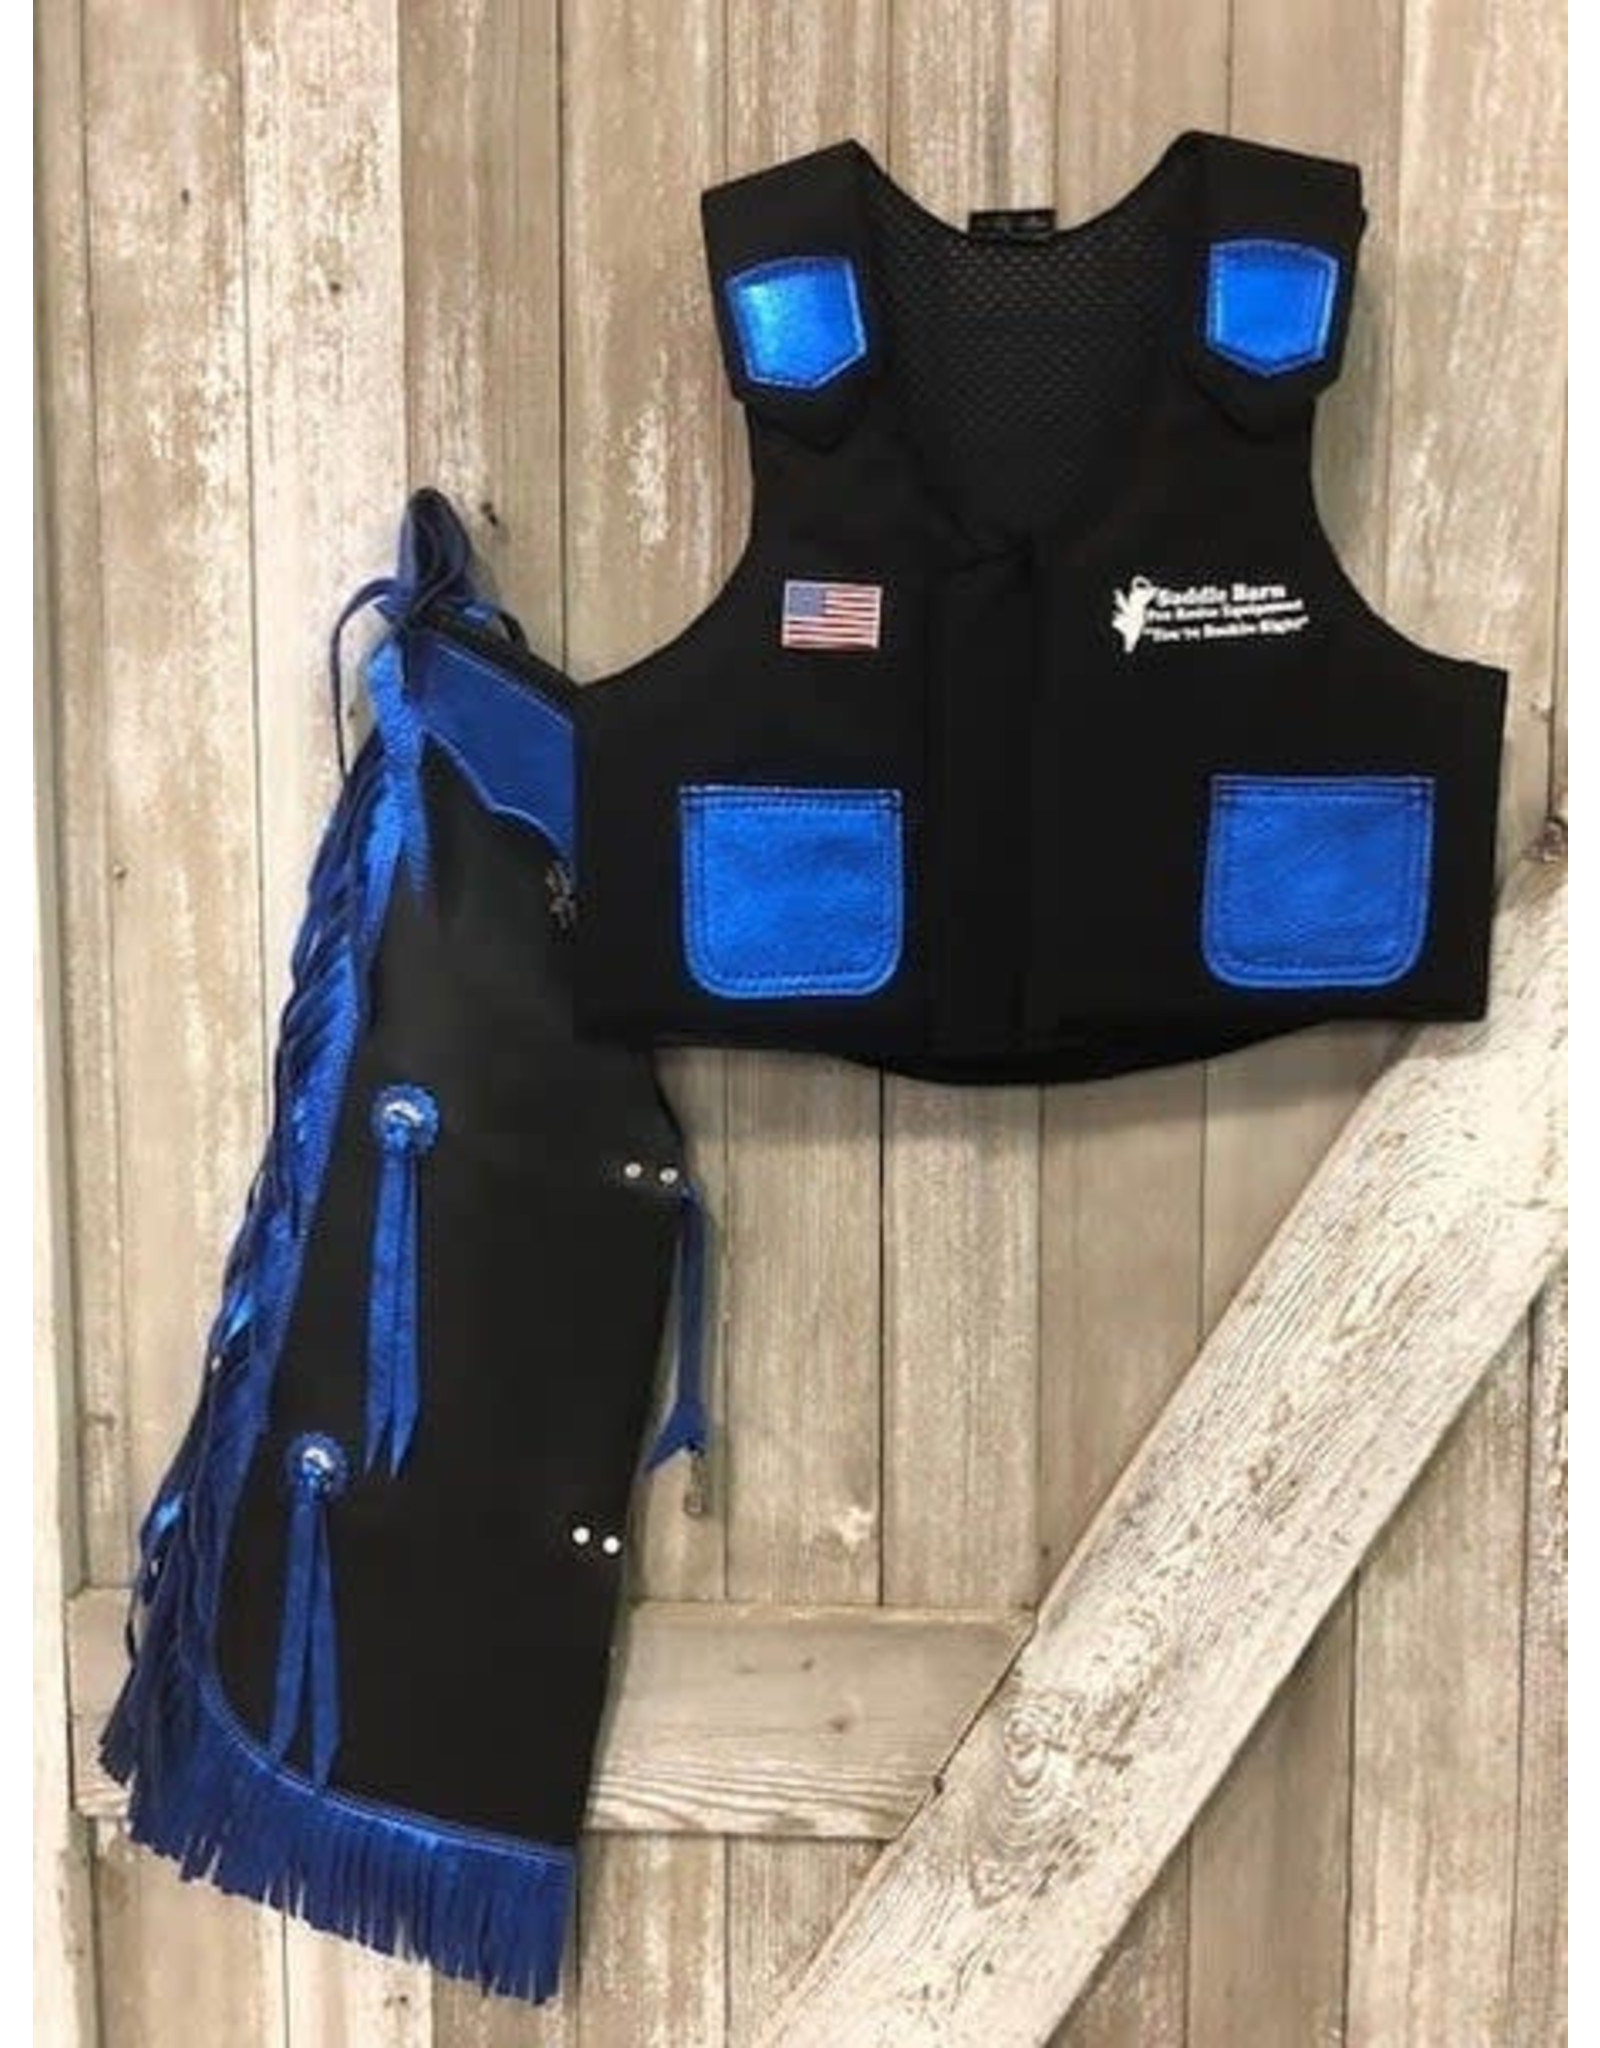 Saddle Barn Mutton Busting Chap/Vest Set Blue Metallic 27-54